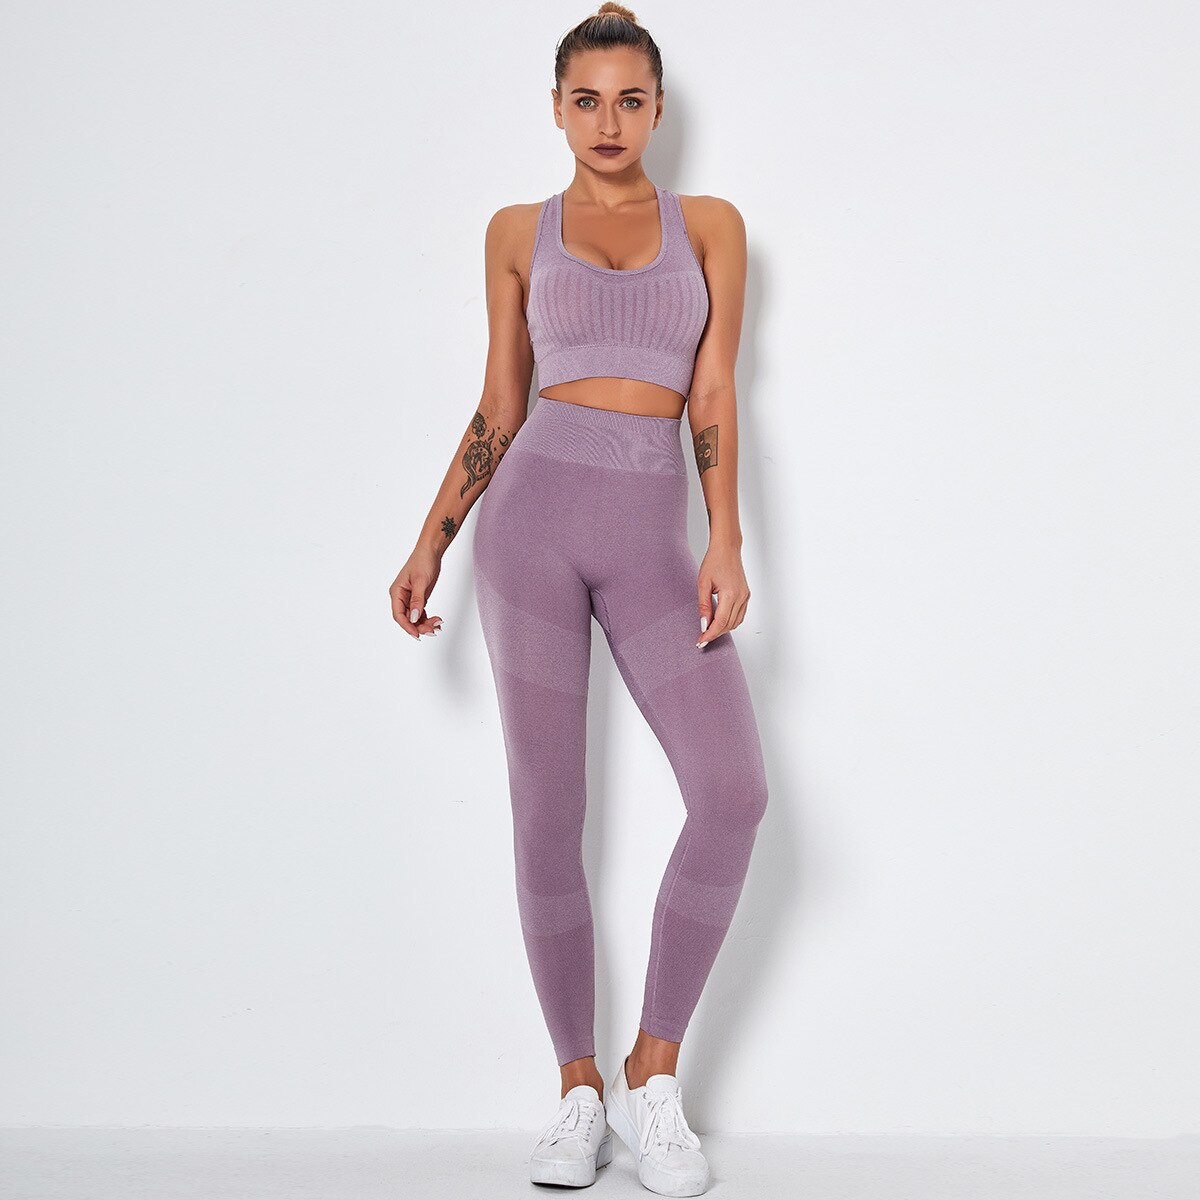 Women's Sportswear Seamless Yoga Set Gym Clothing Sports Suits Fitness Bra Crop Top Legging Long Sleeve Shirt Fitness Shorts Set